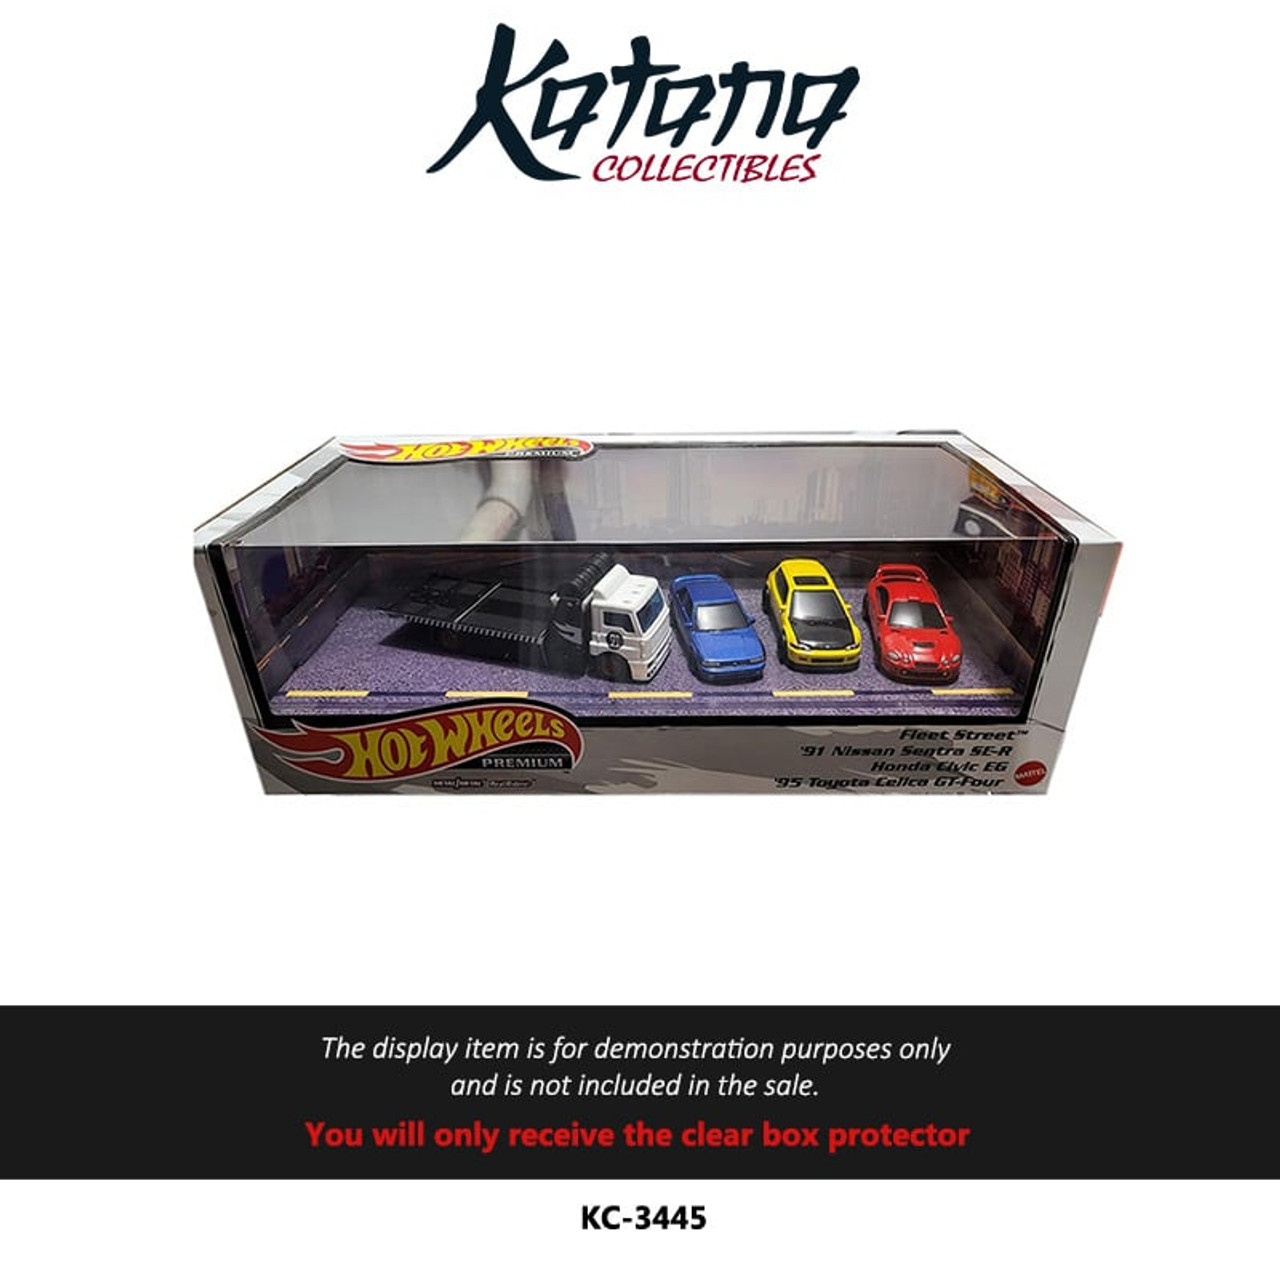 Katana Collectibles Protector For Hot Wheels Premium 4-Pack